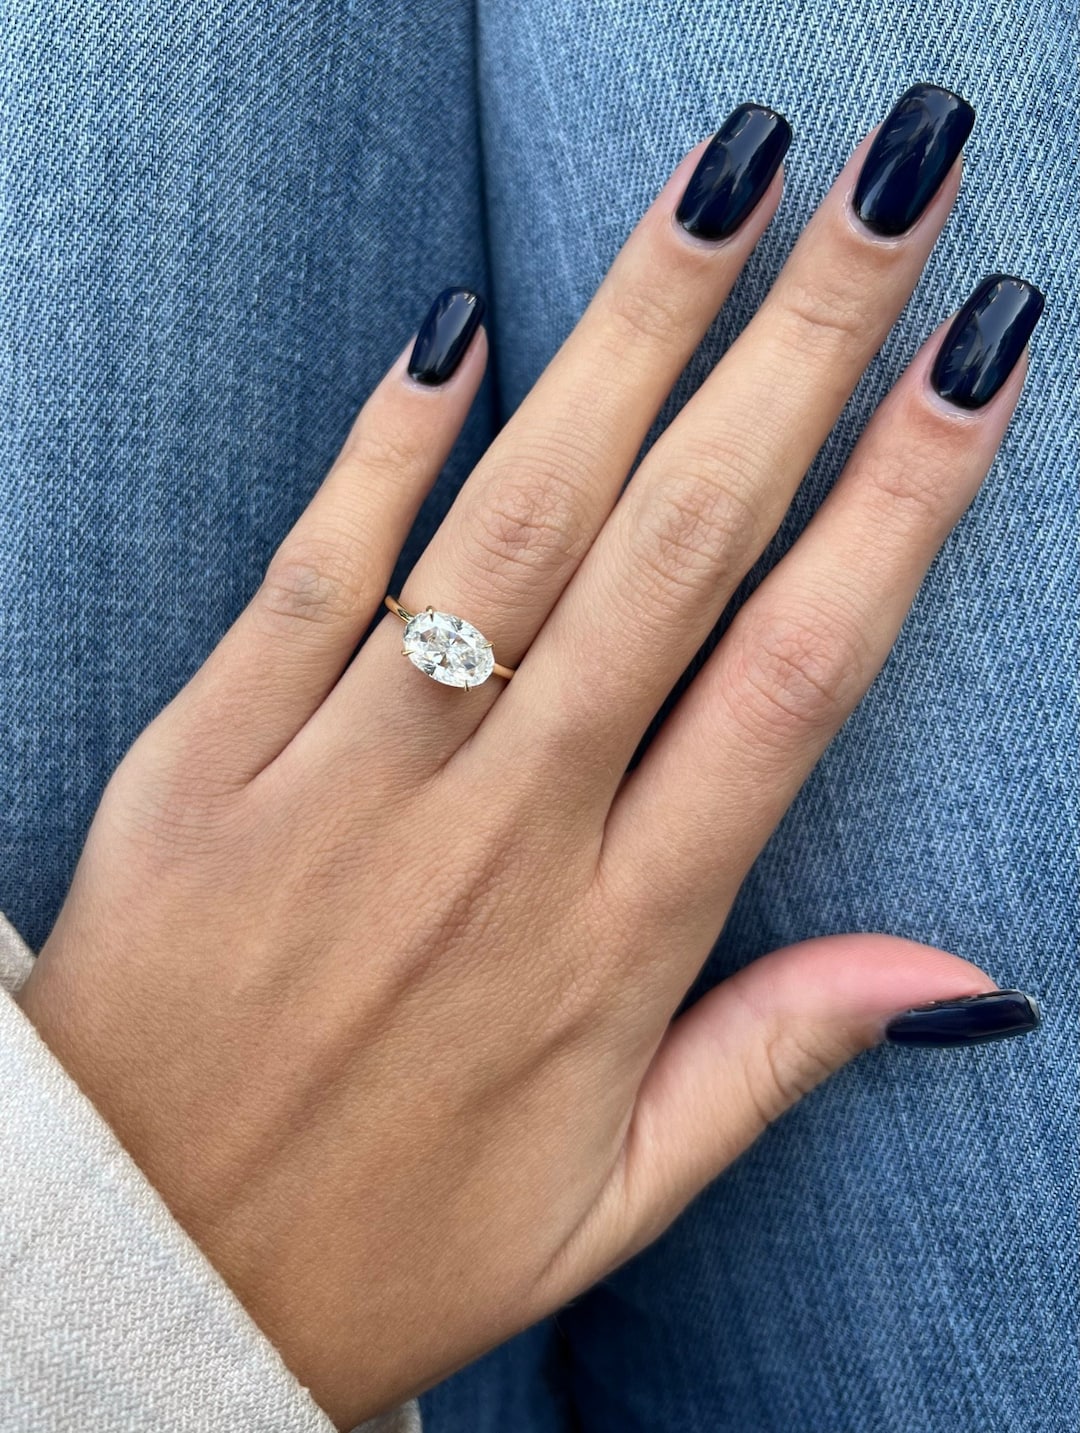 20 Stunning and Unique Engagement Ring Ideas - Ken & Dana Design